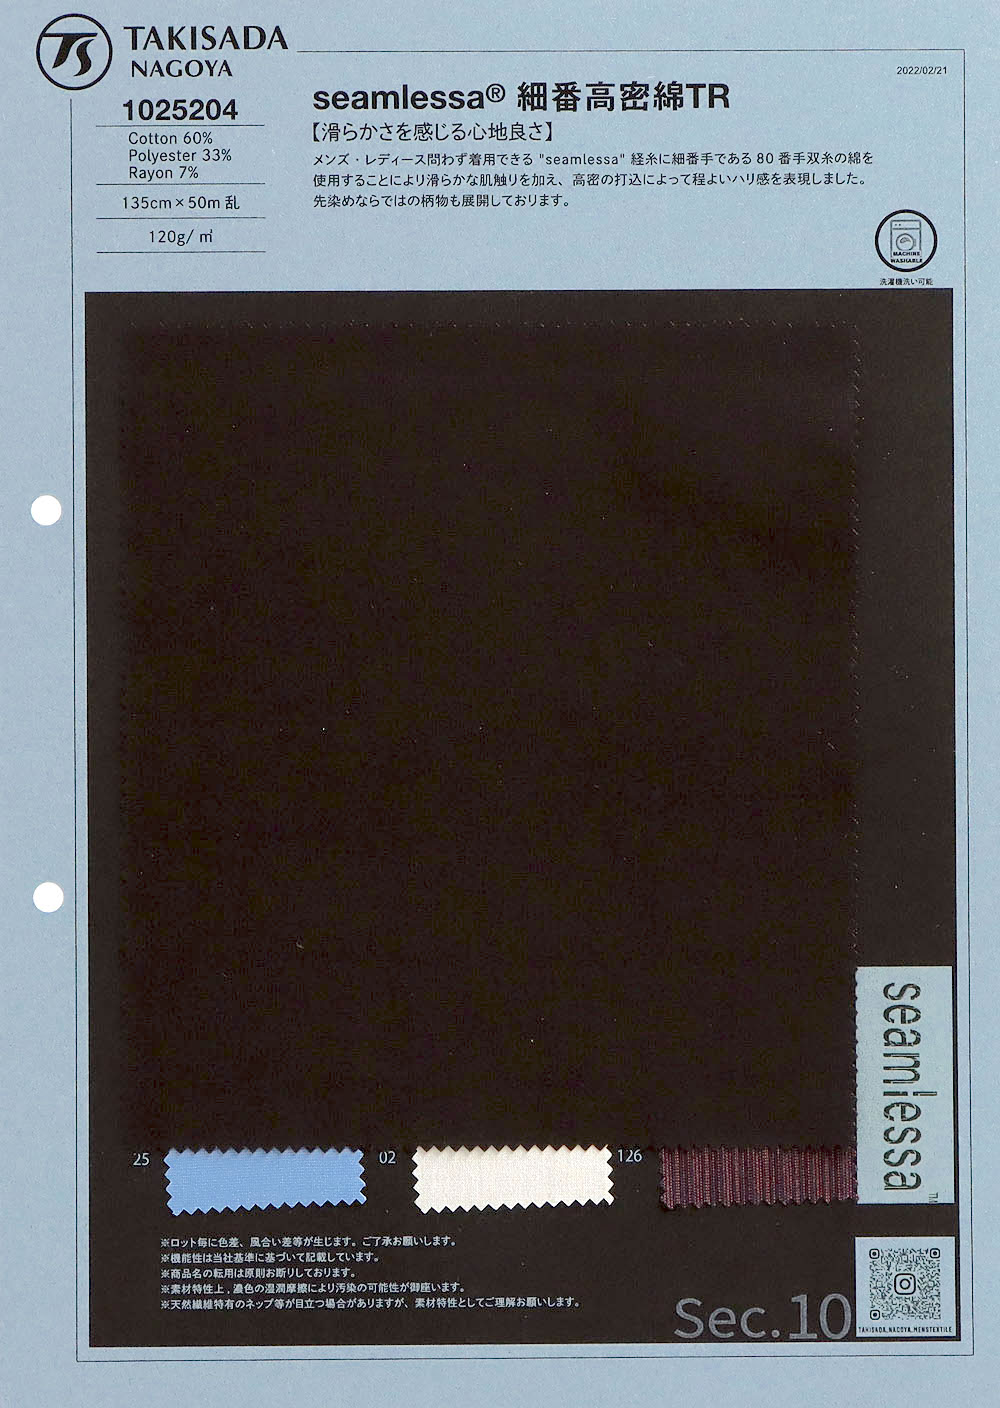 1025204 Seamlessa (R) Cotone Fine Numero Alta Densità TR[Tessile / Tessuto] Takisada Nagoya